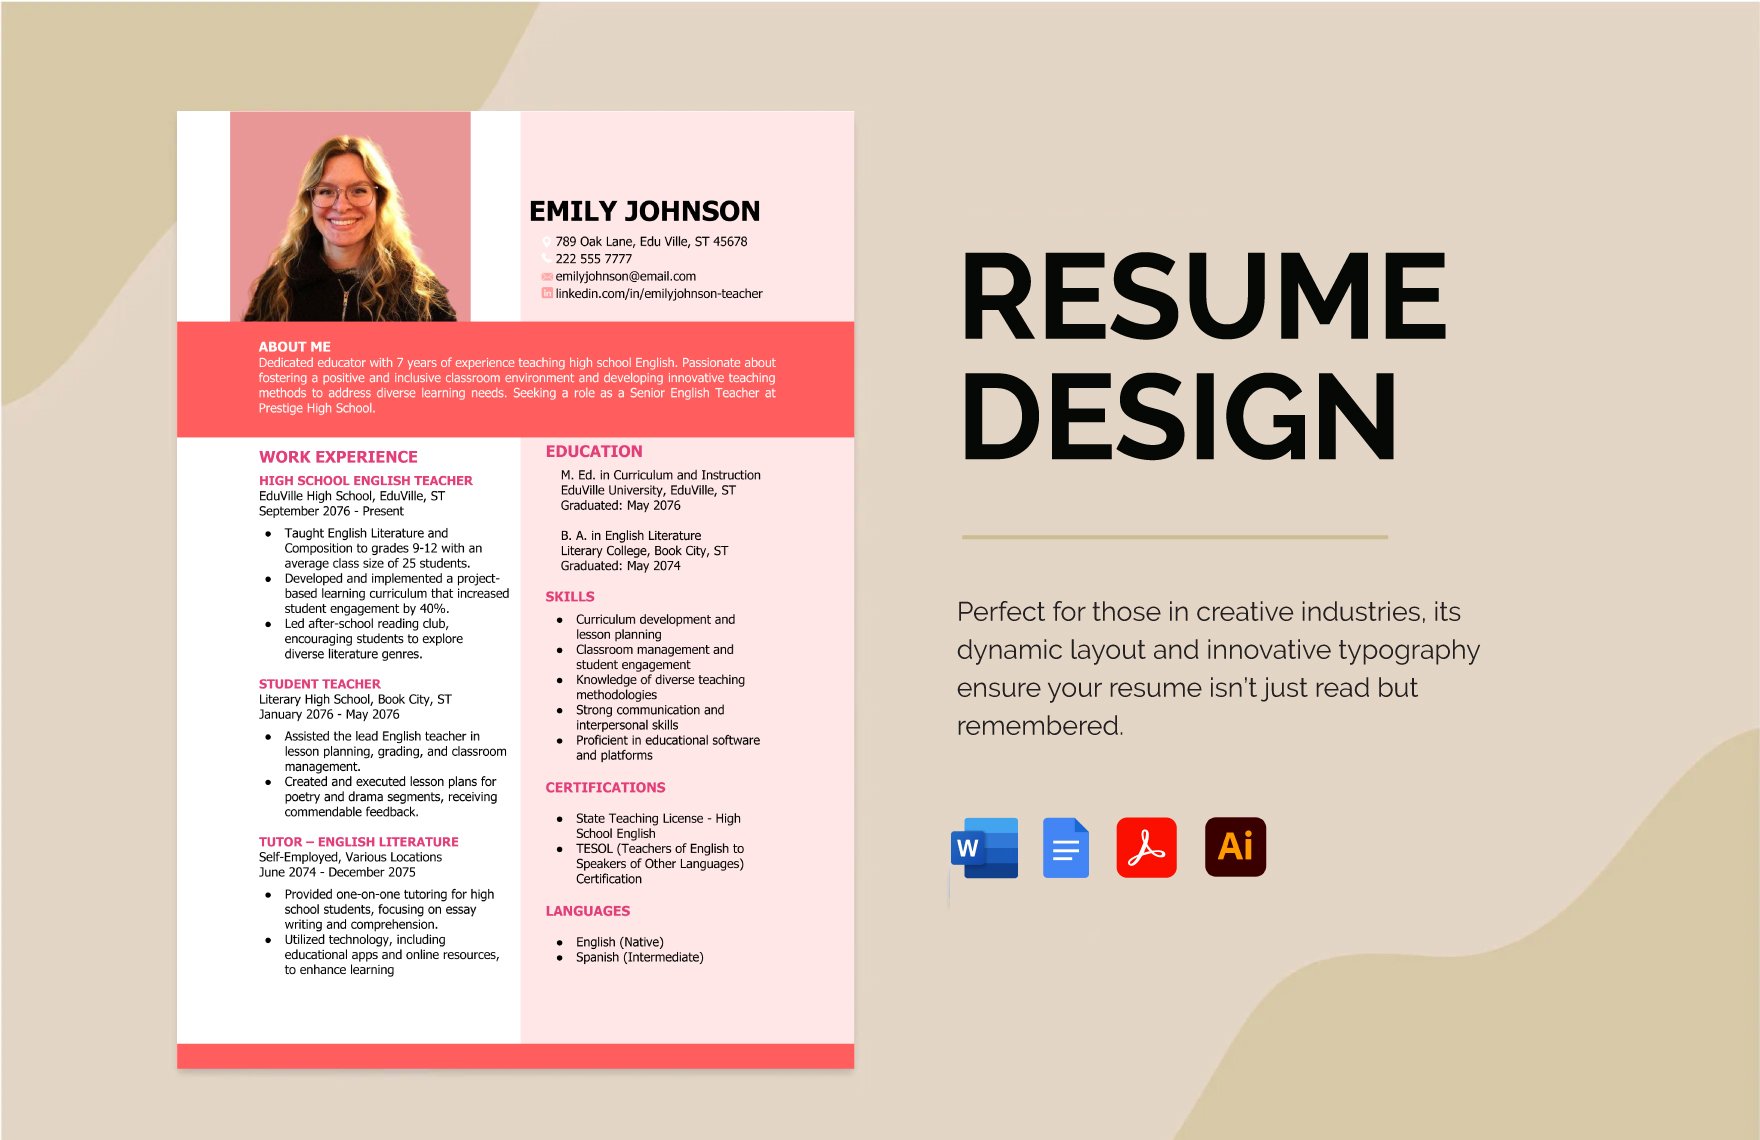 Free Resume Design Template in Word, Google Docs, PDF, Illustrator